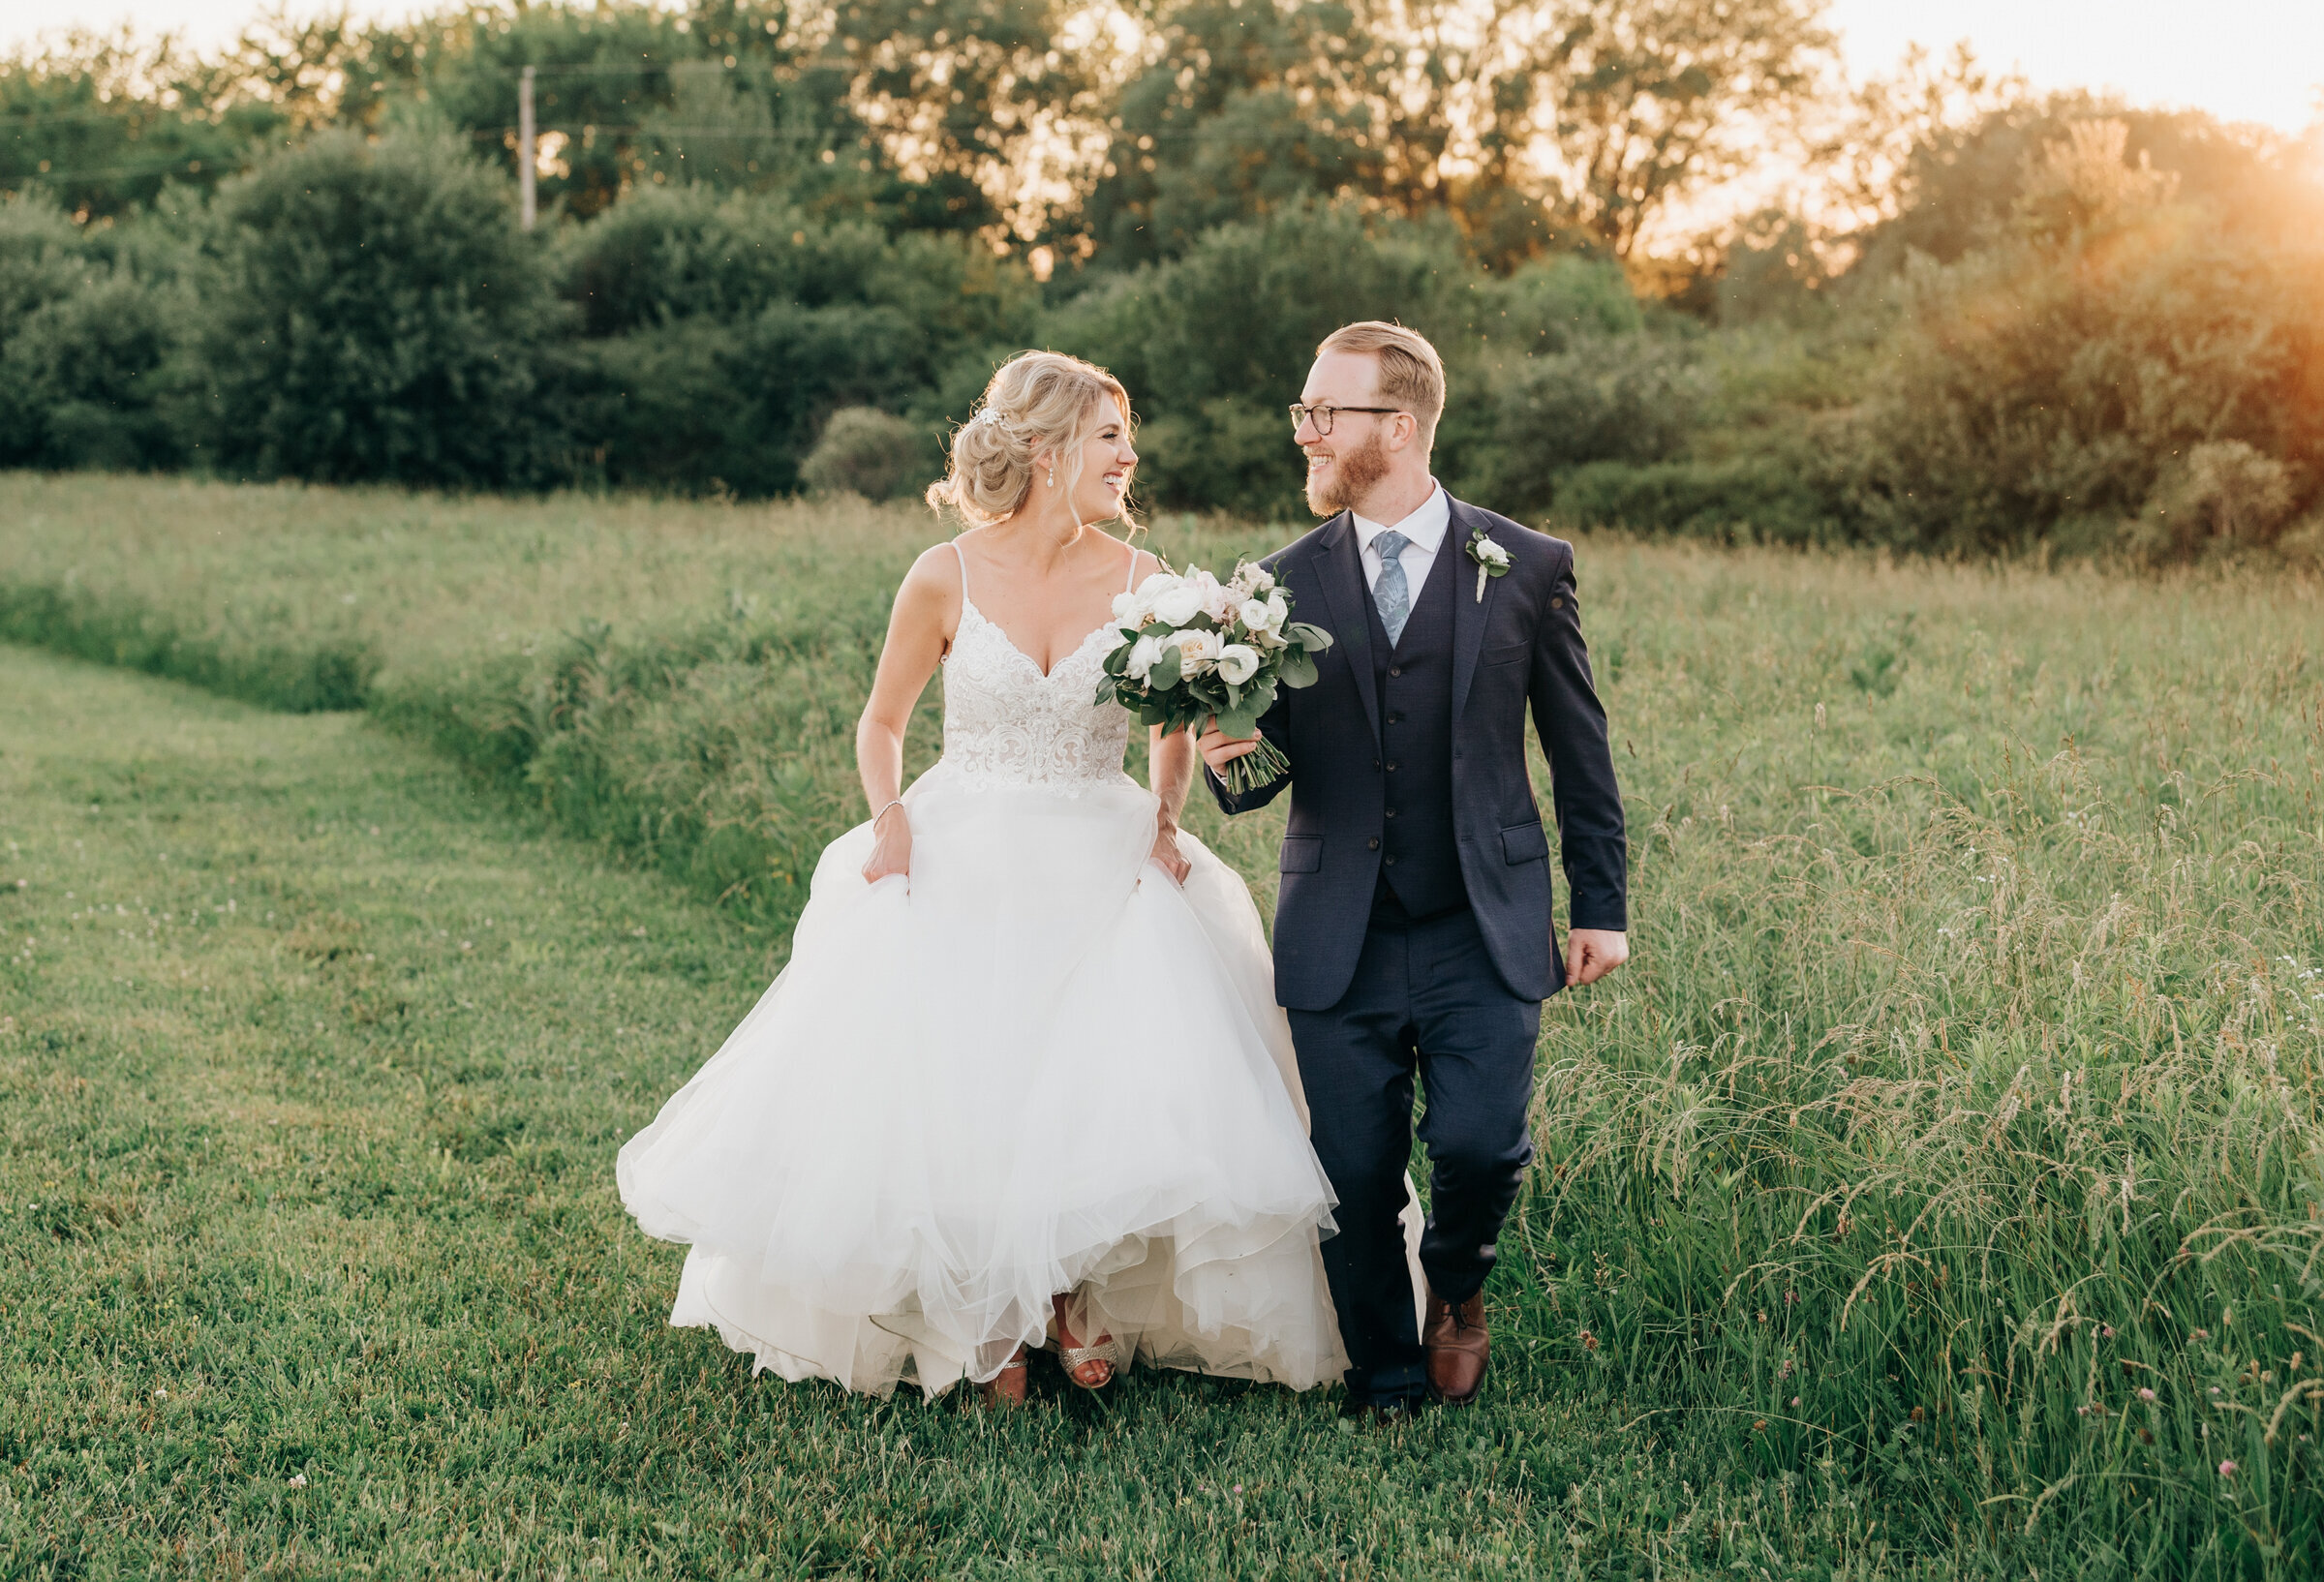 Nova Markina - Ontario Wedding Photographer - Wedding at Willow Creek Barn 120